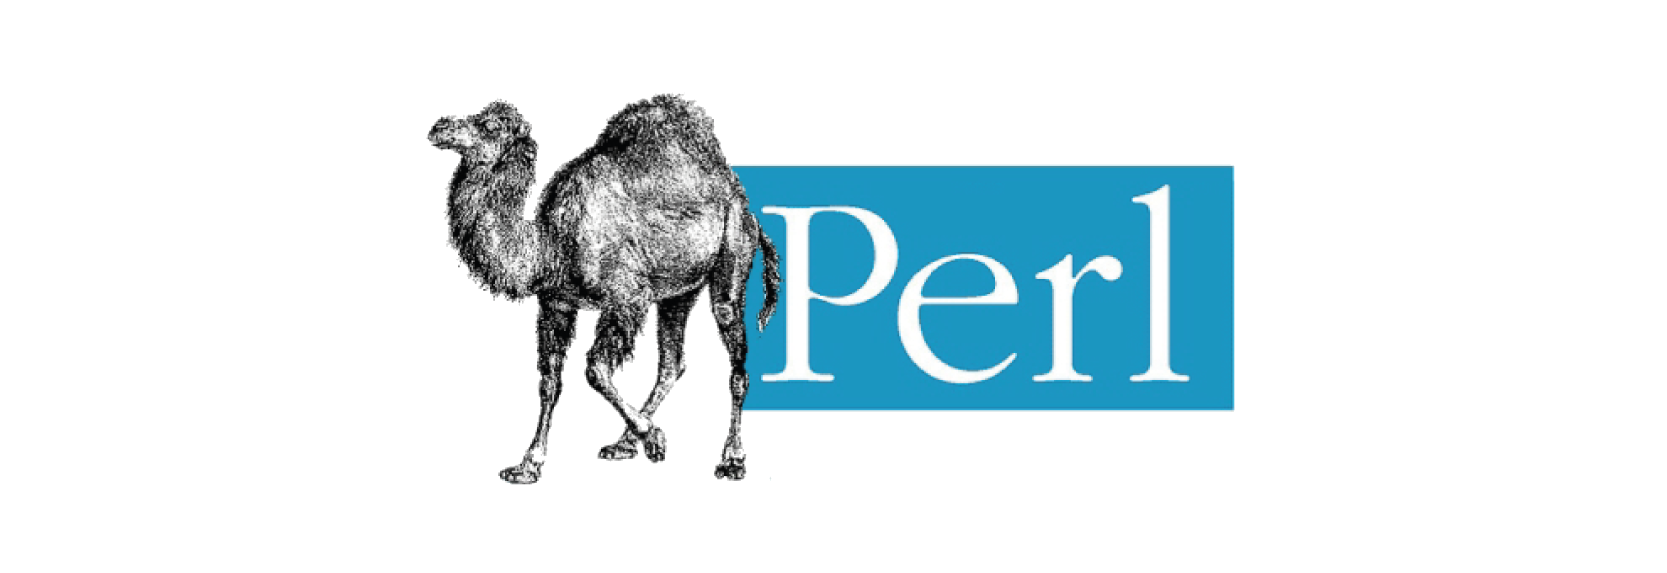 Am world com. Perl логотип. Perl язык программирования. Pearl язык программирования. Perl без фона.